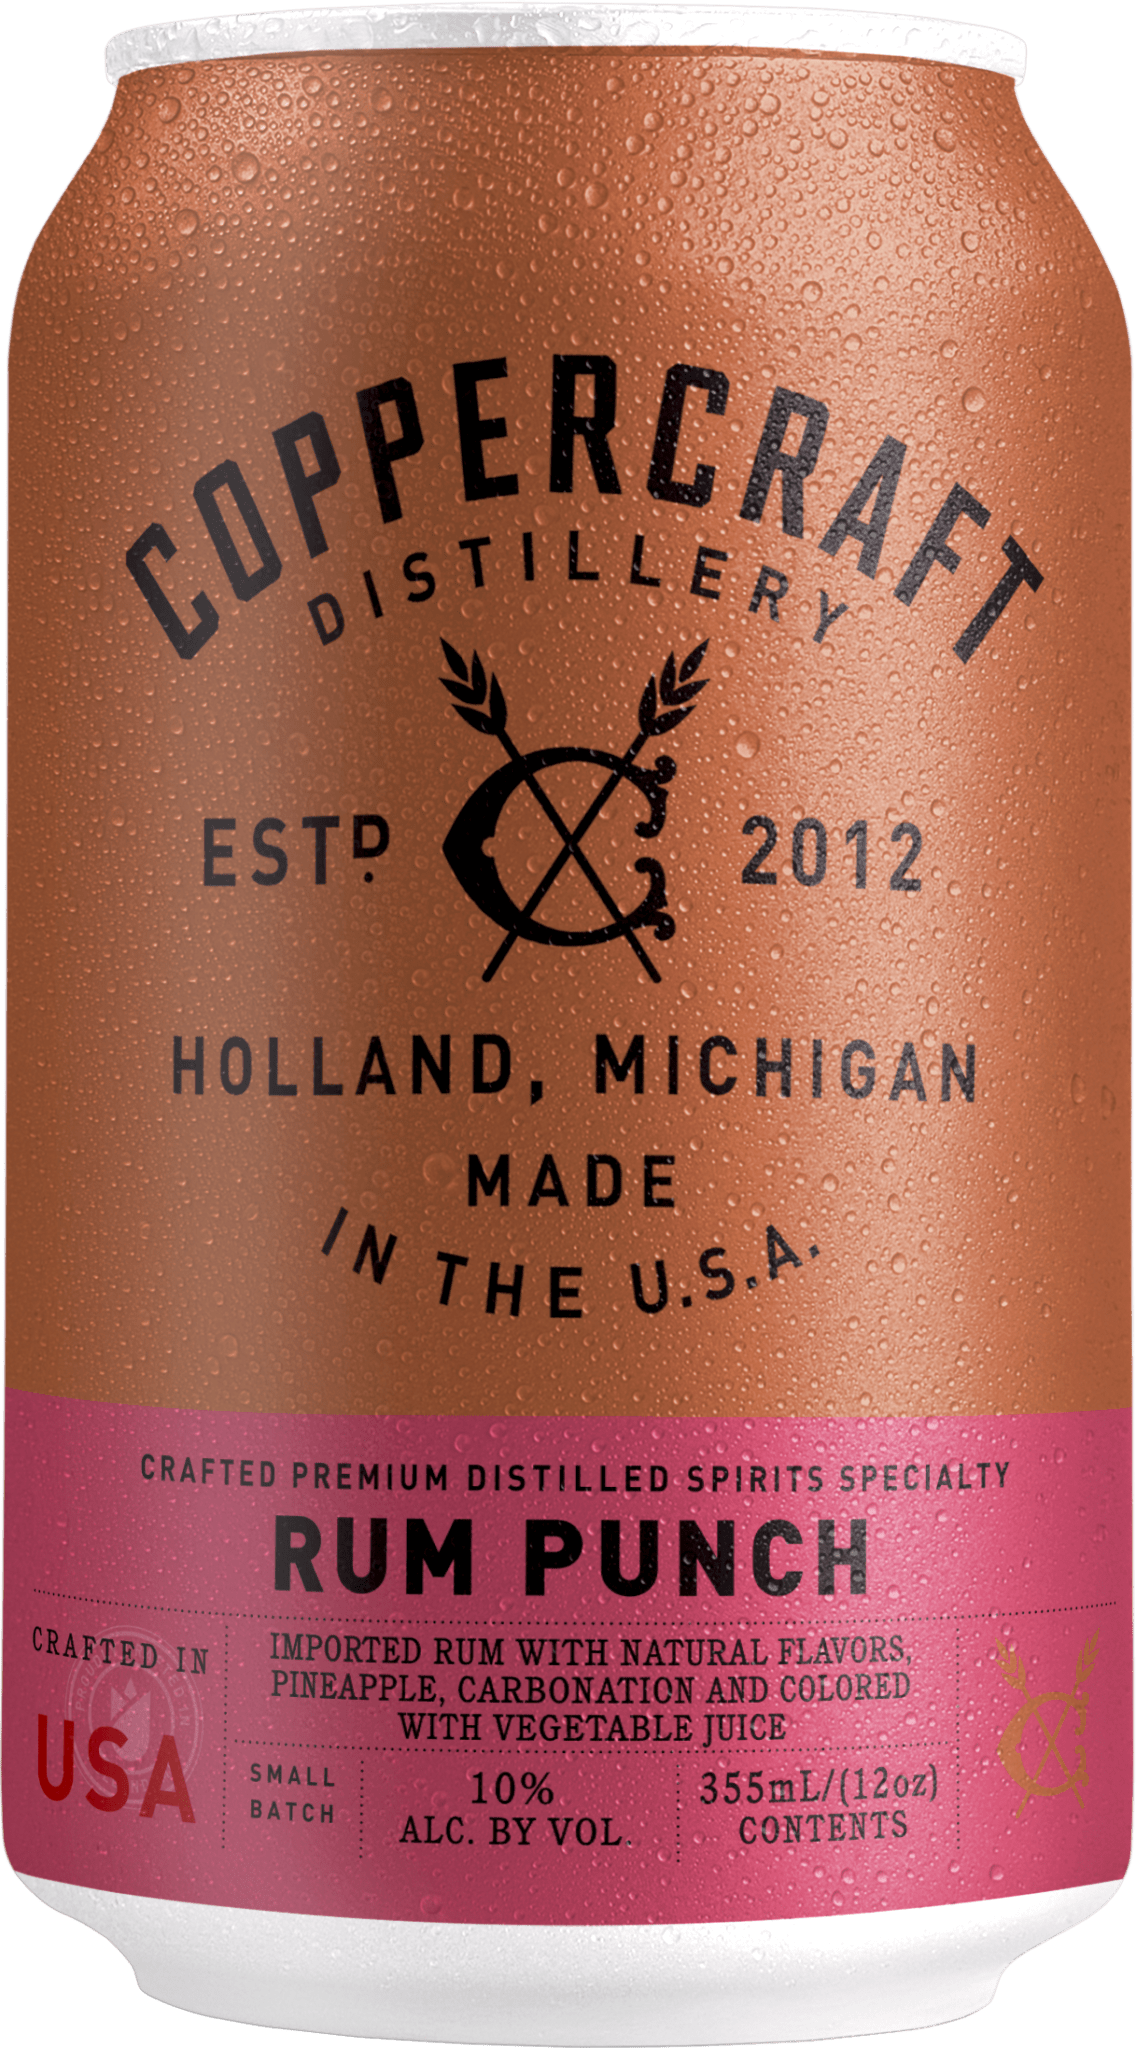 Rum Punch | Coppercraft Distillery